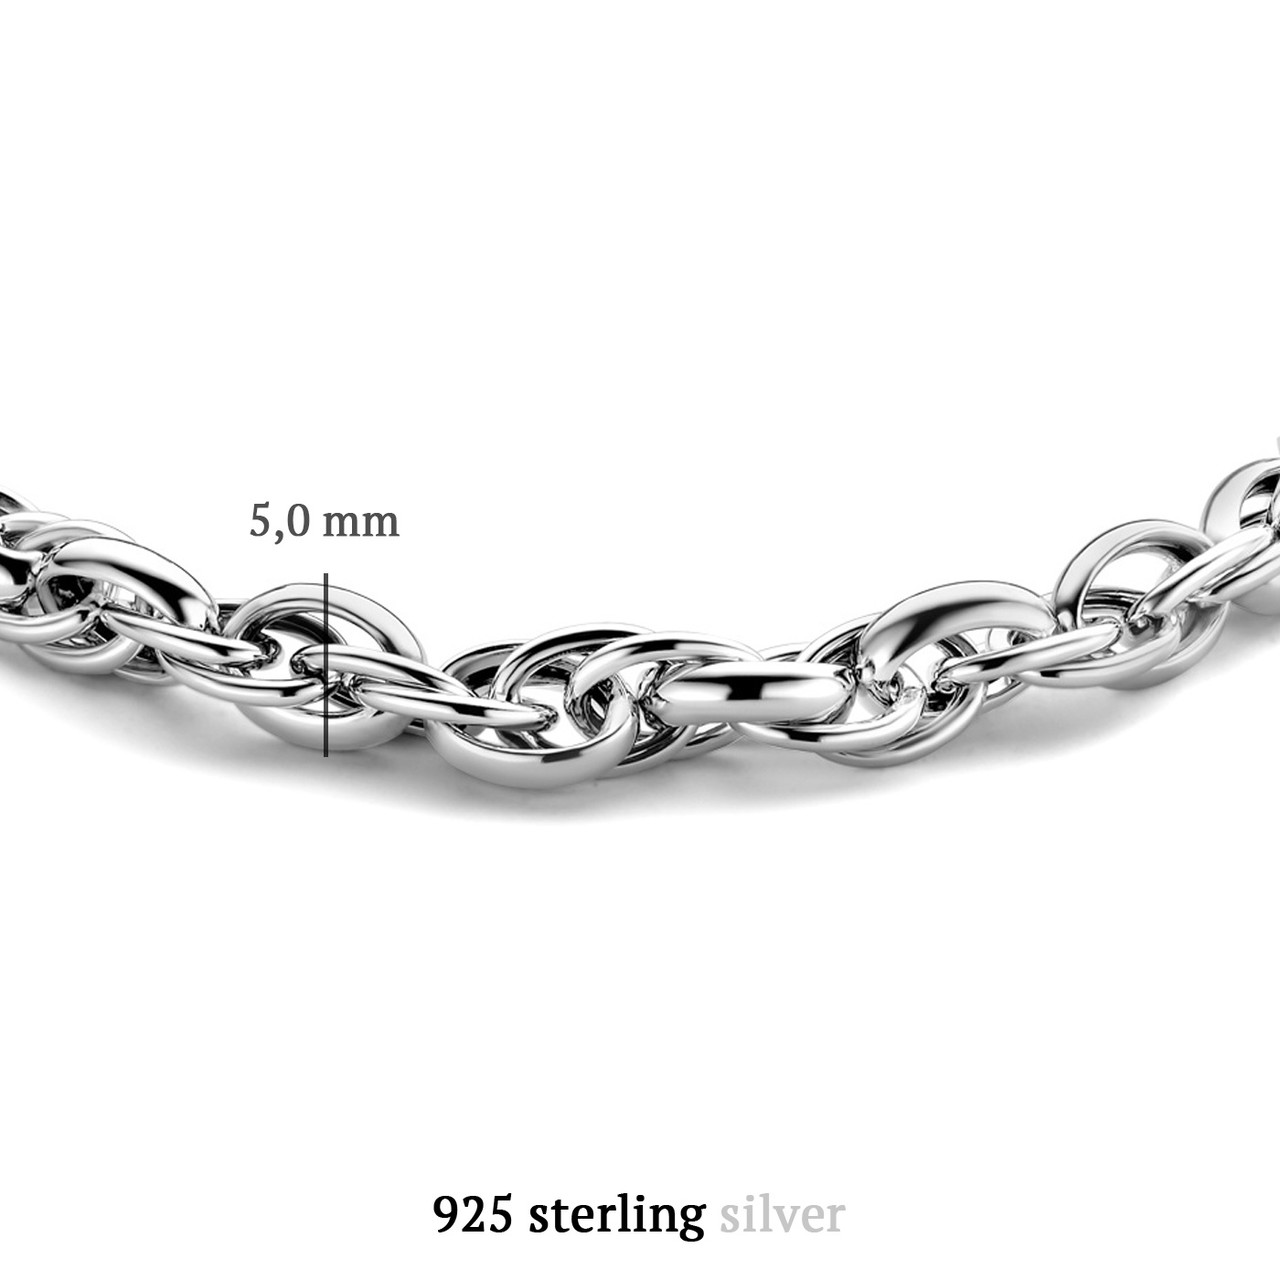 Parte Di Me - 925 sterling silver link bracelet PDM32004